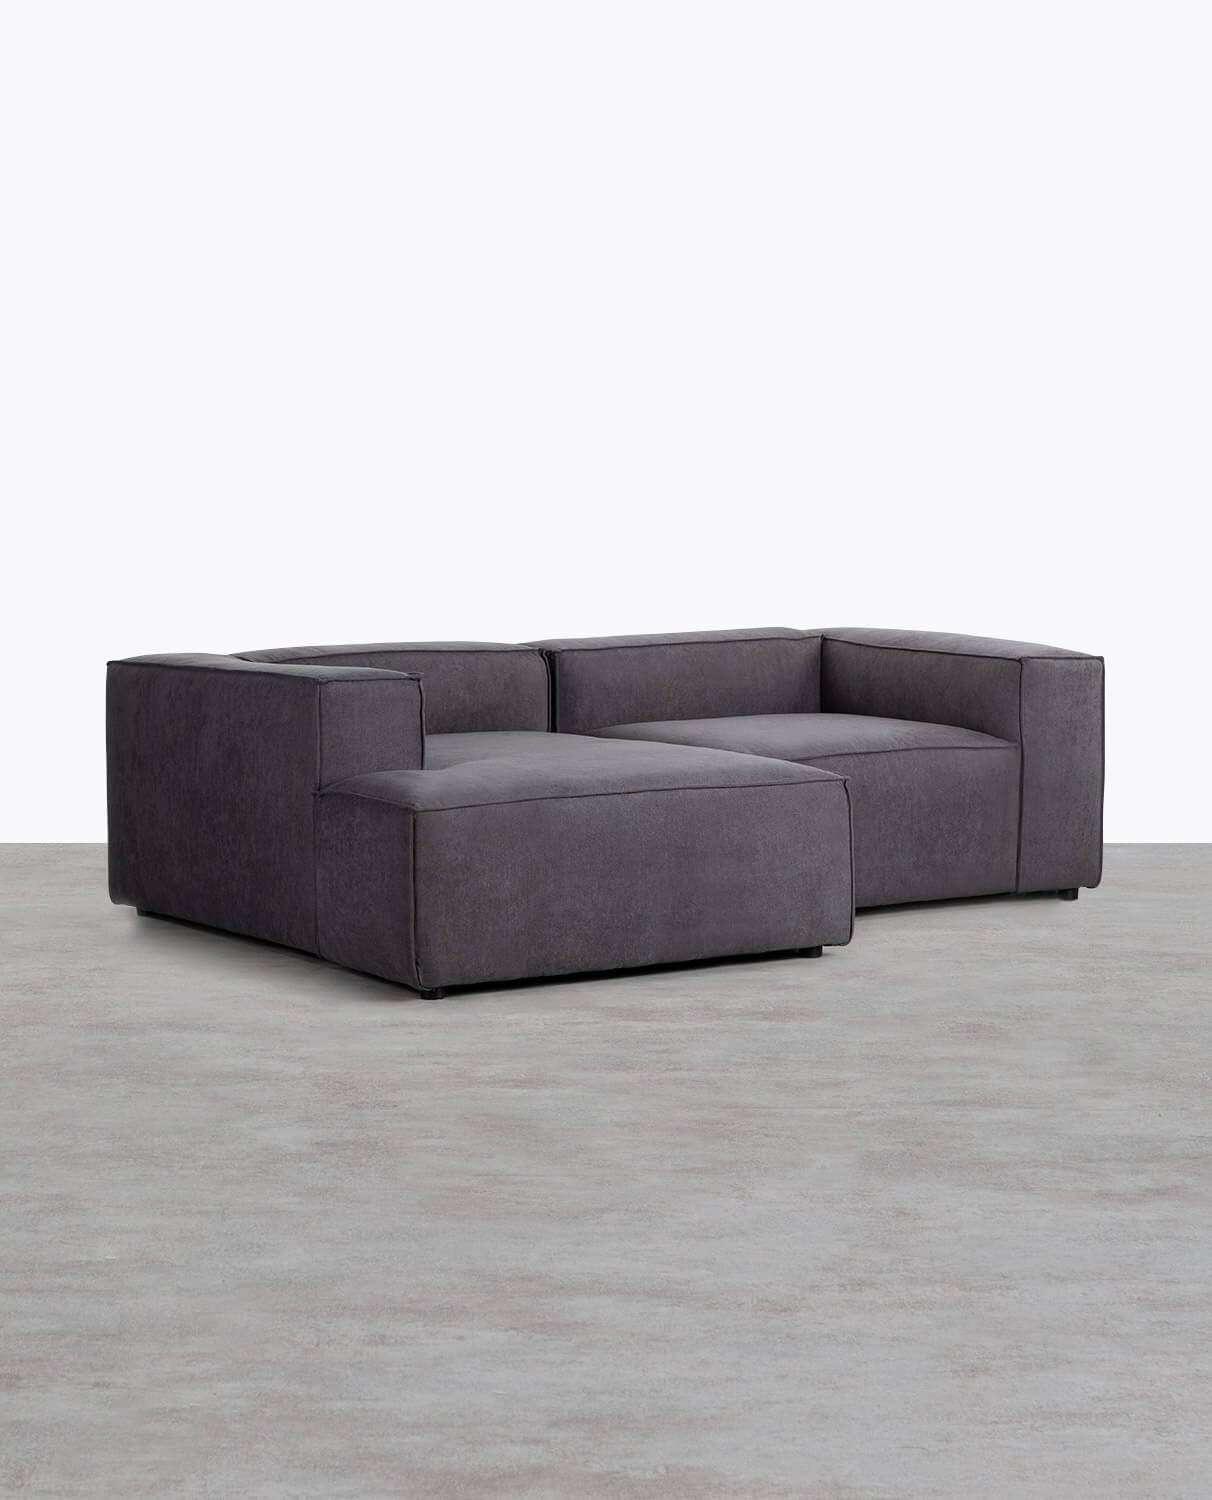 Jordan XL Modulares Chaise Longue Sofa mit Ecksessel aus Stoff, Galeriebild 2